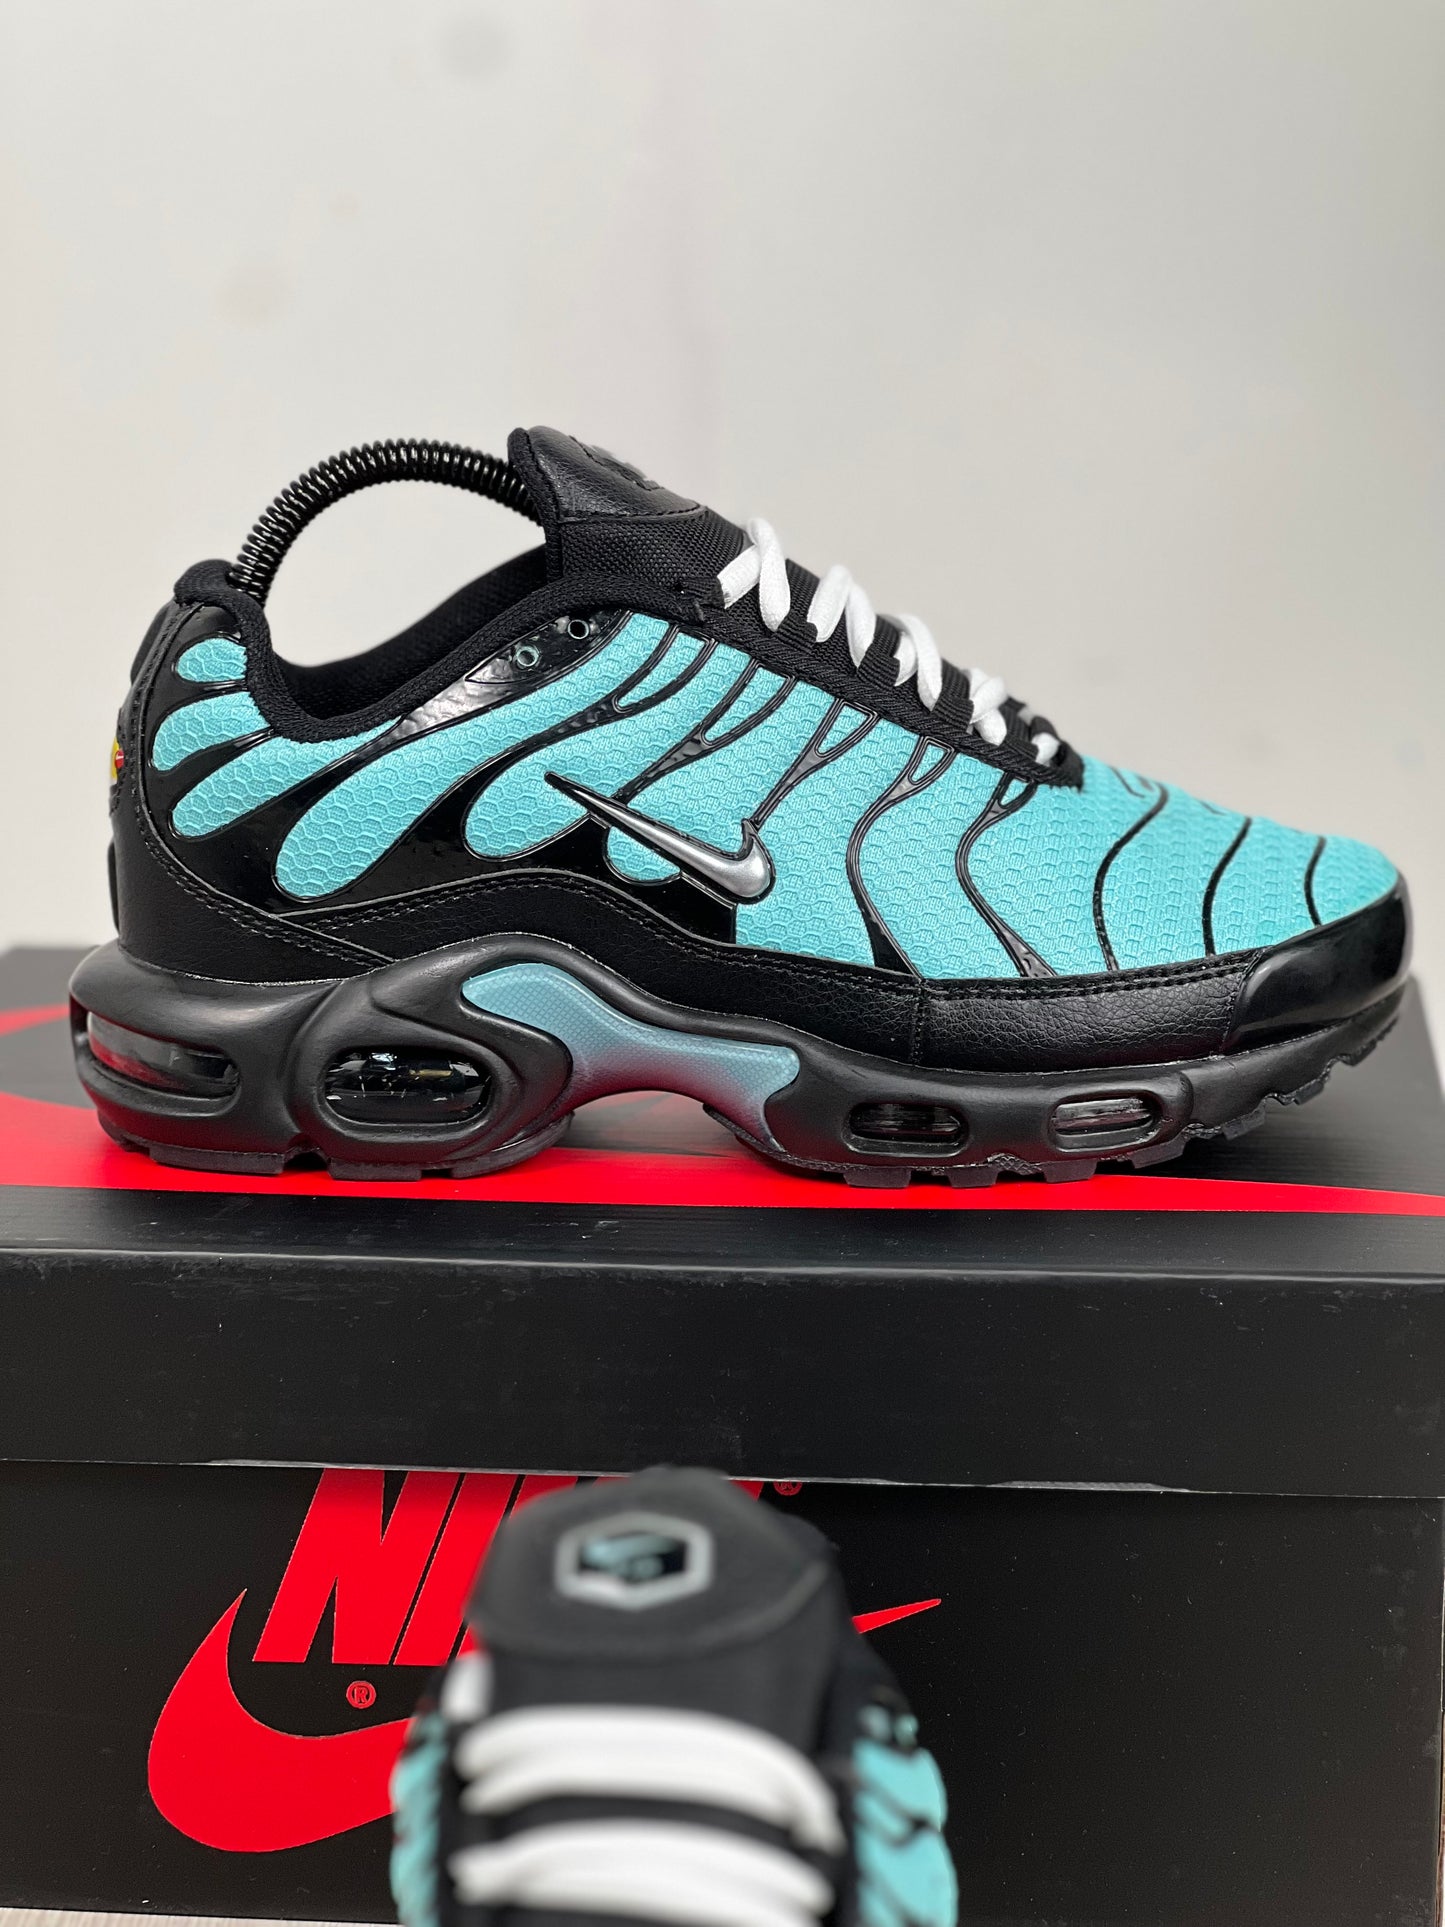 Nike Air Max Plus TN “Aqua marine”